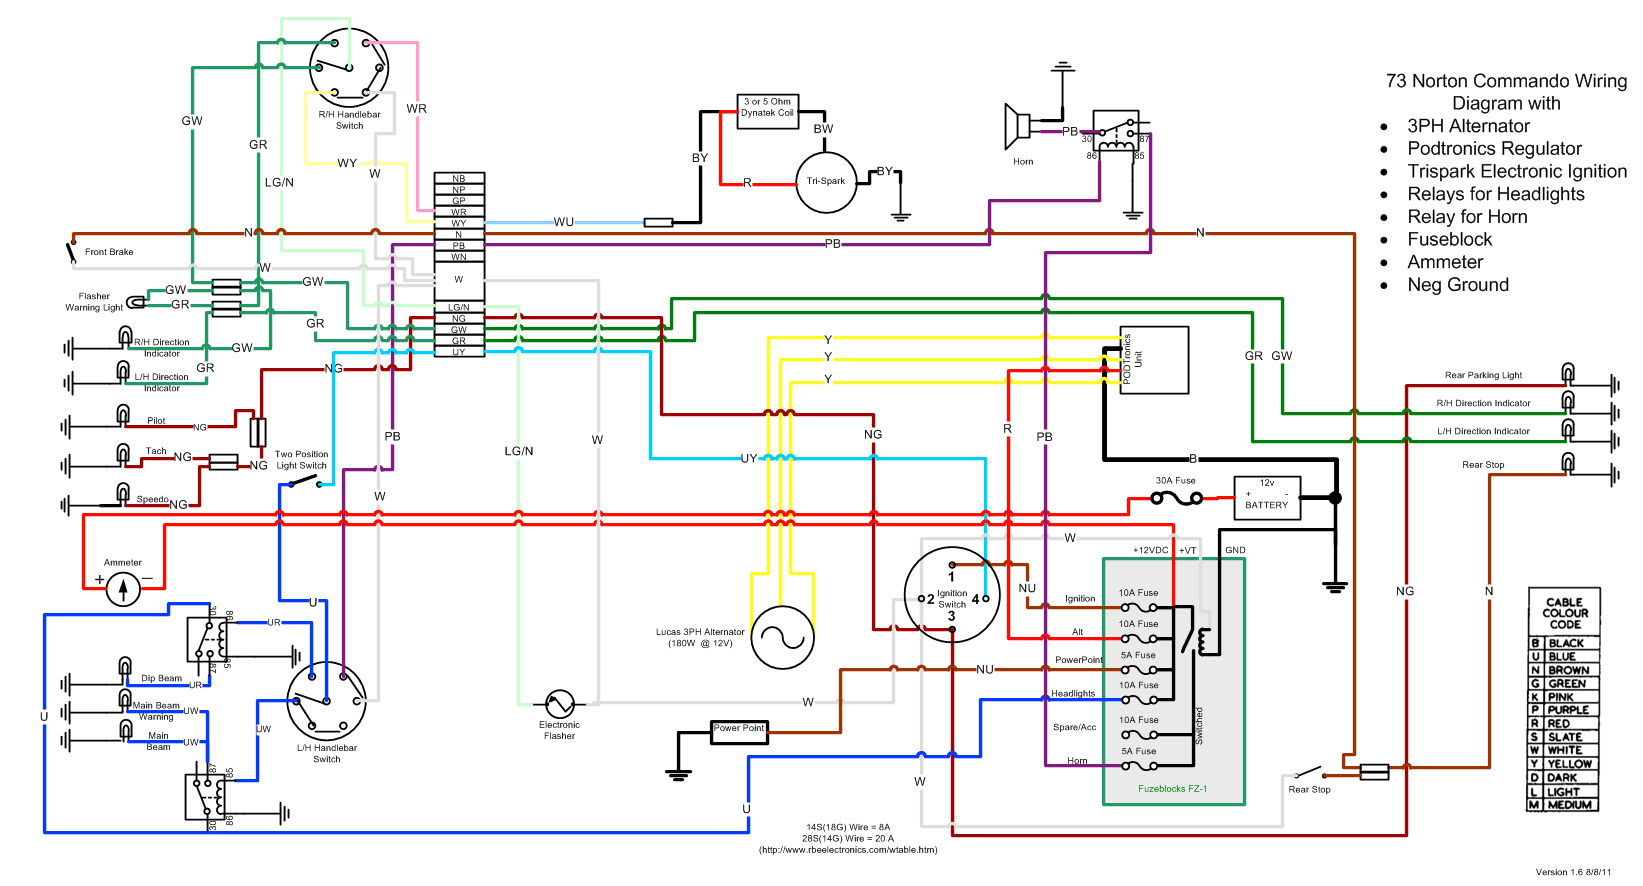 dimarzio air norton wiring diagram